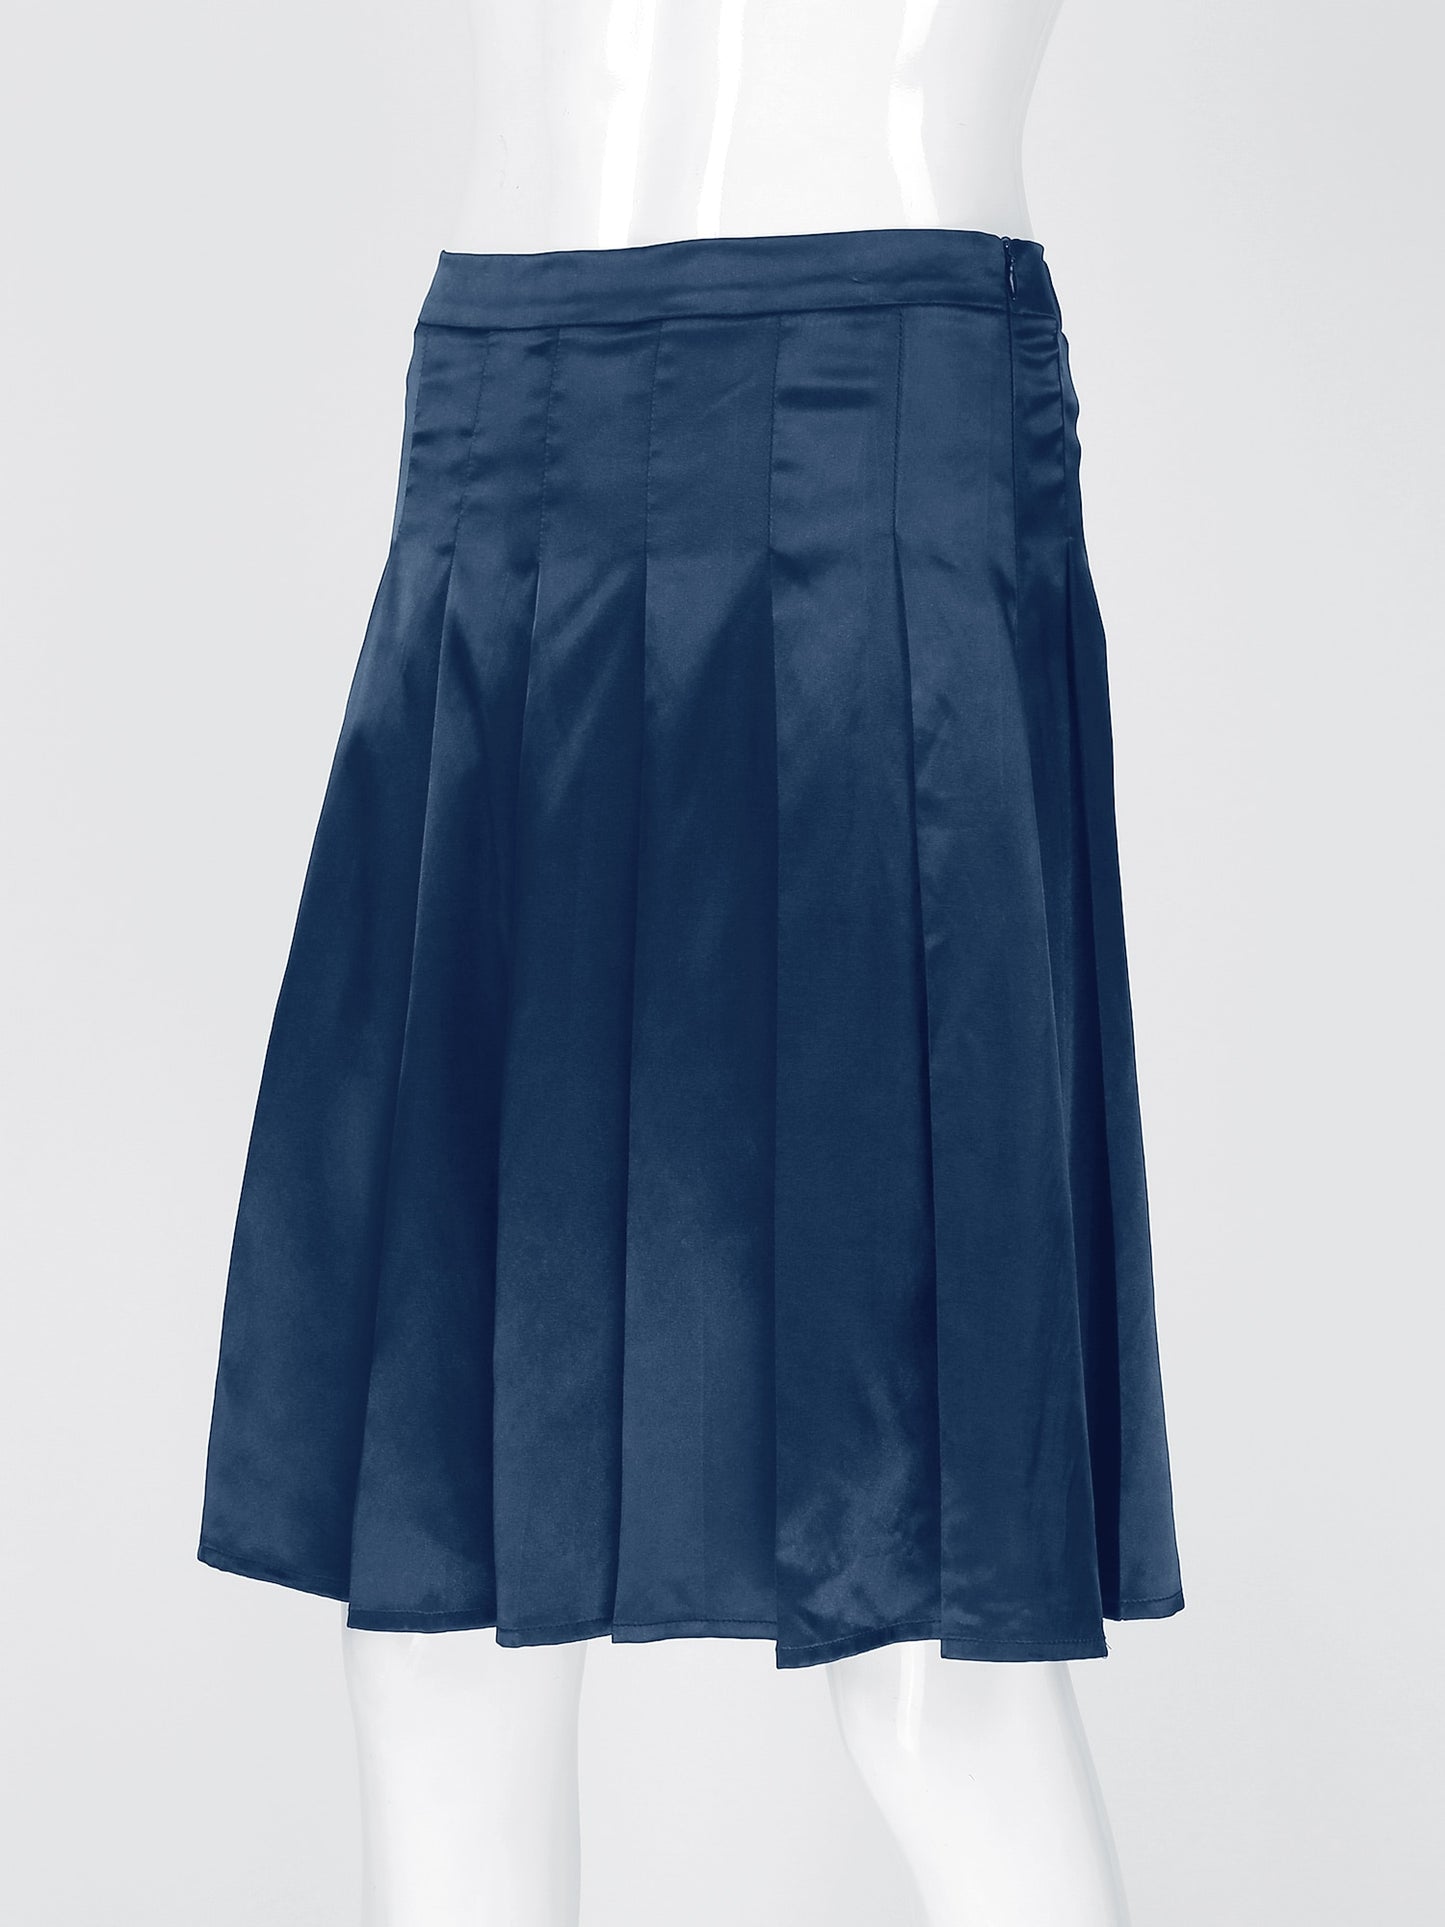 Satin Skirt: Crossdresser's Nightwear and Loungewear